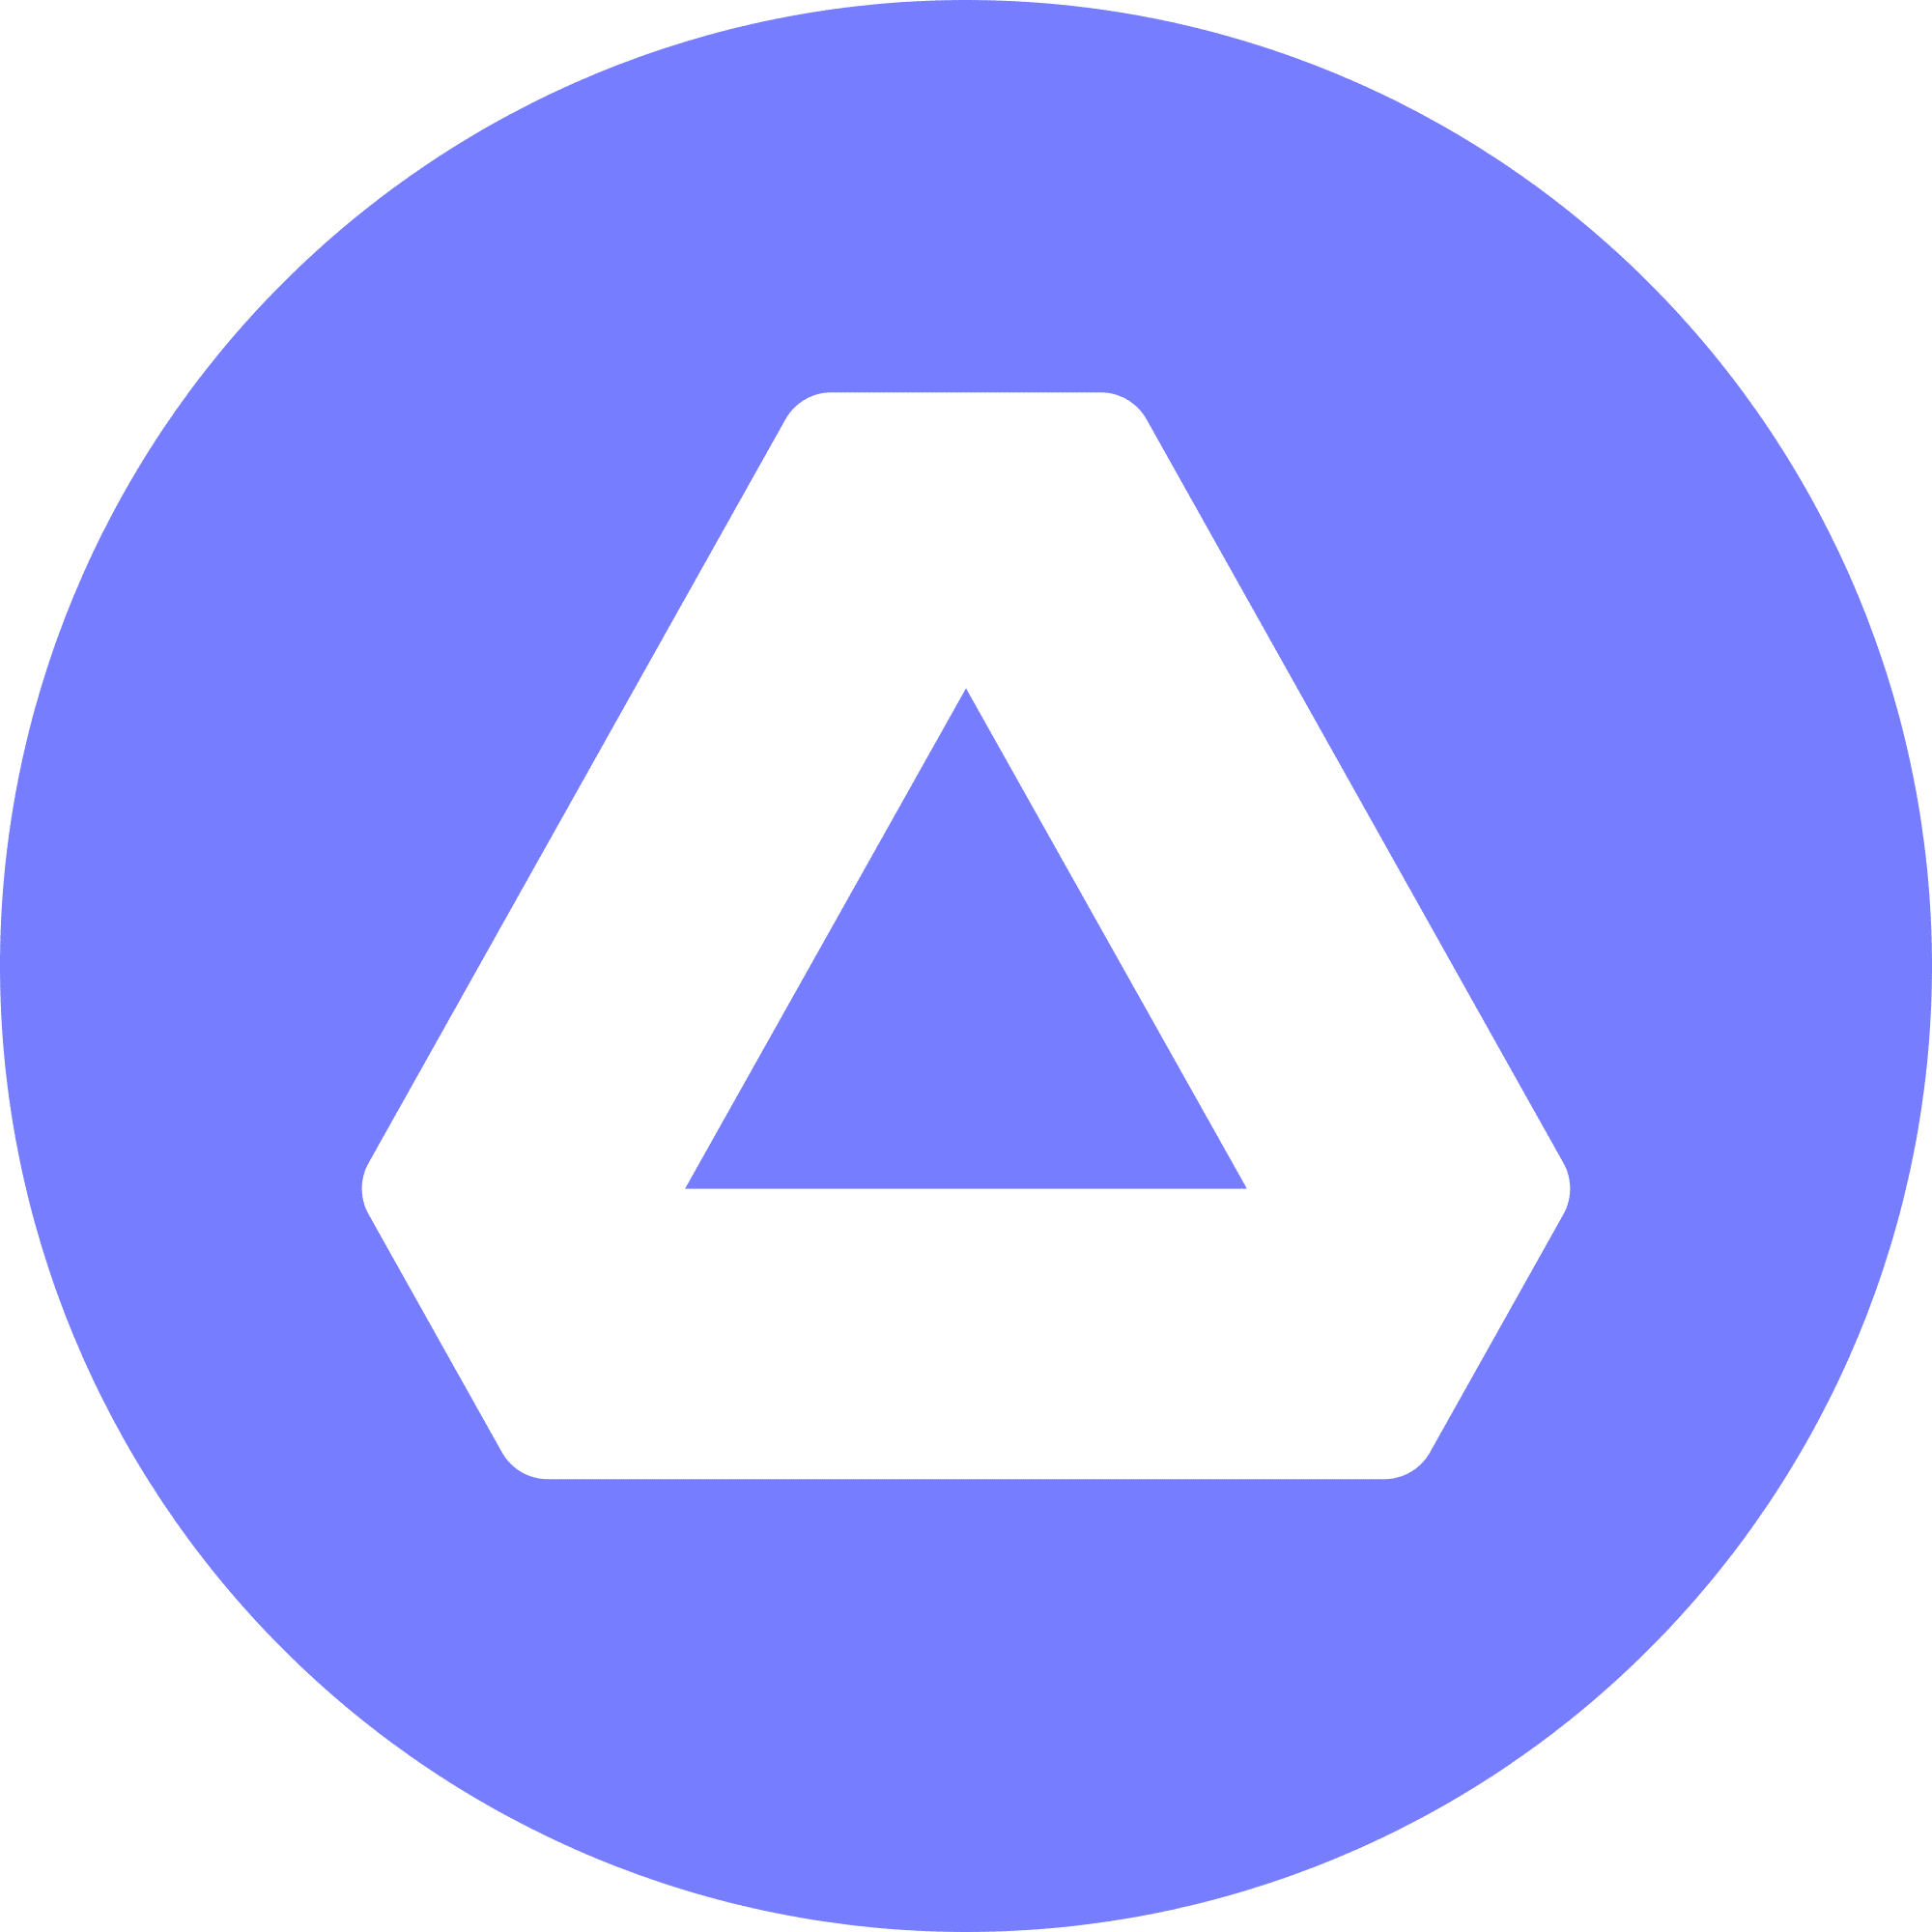 Achain (ACT) logo